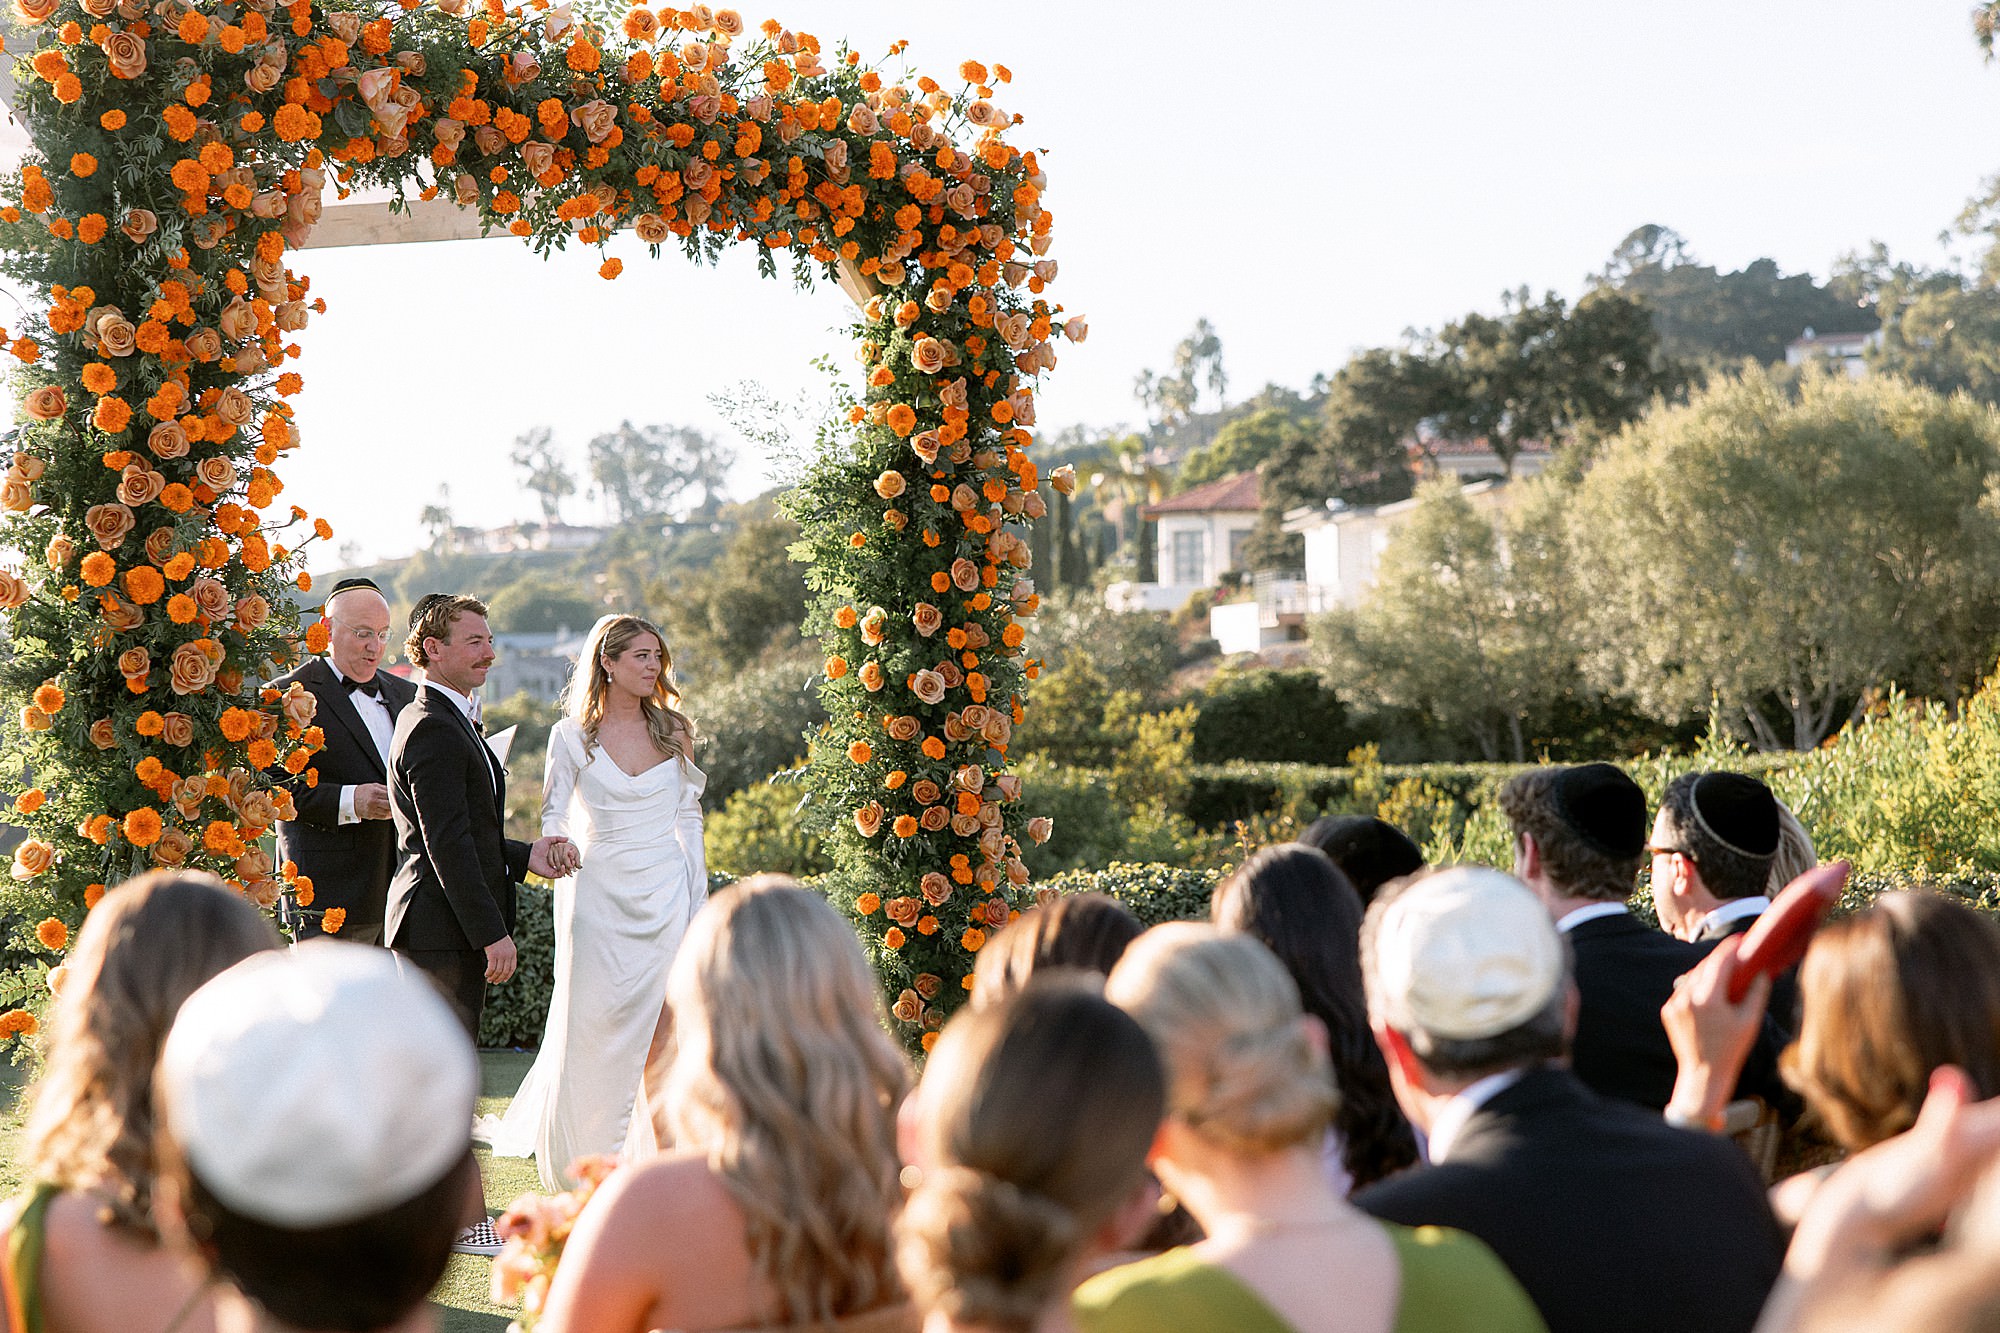 Montecito Club wedding with custom chuppah